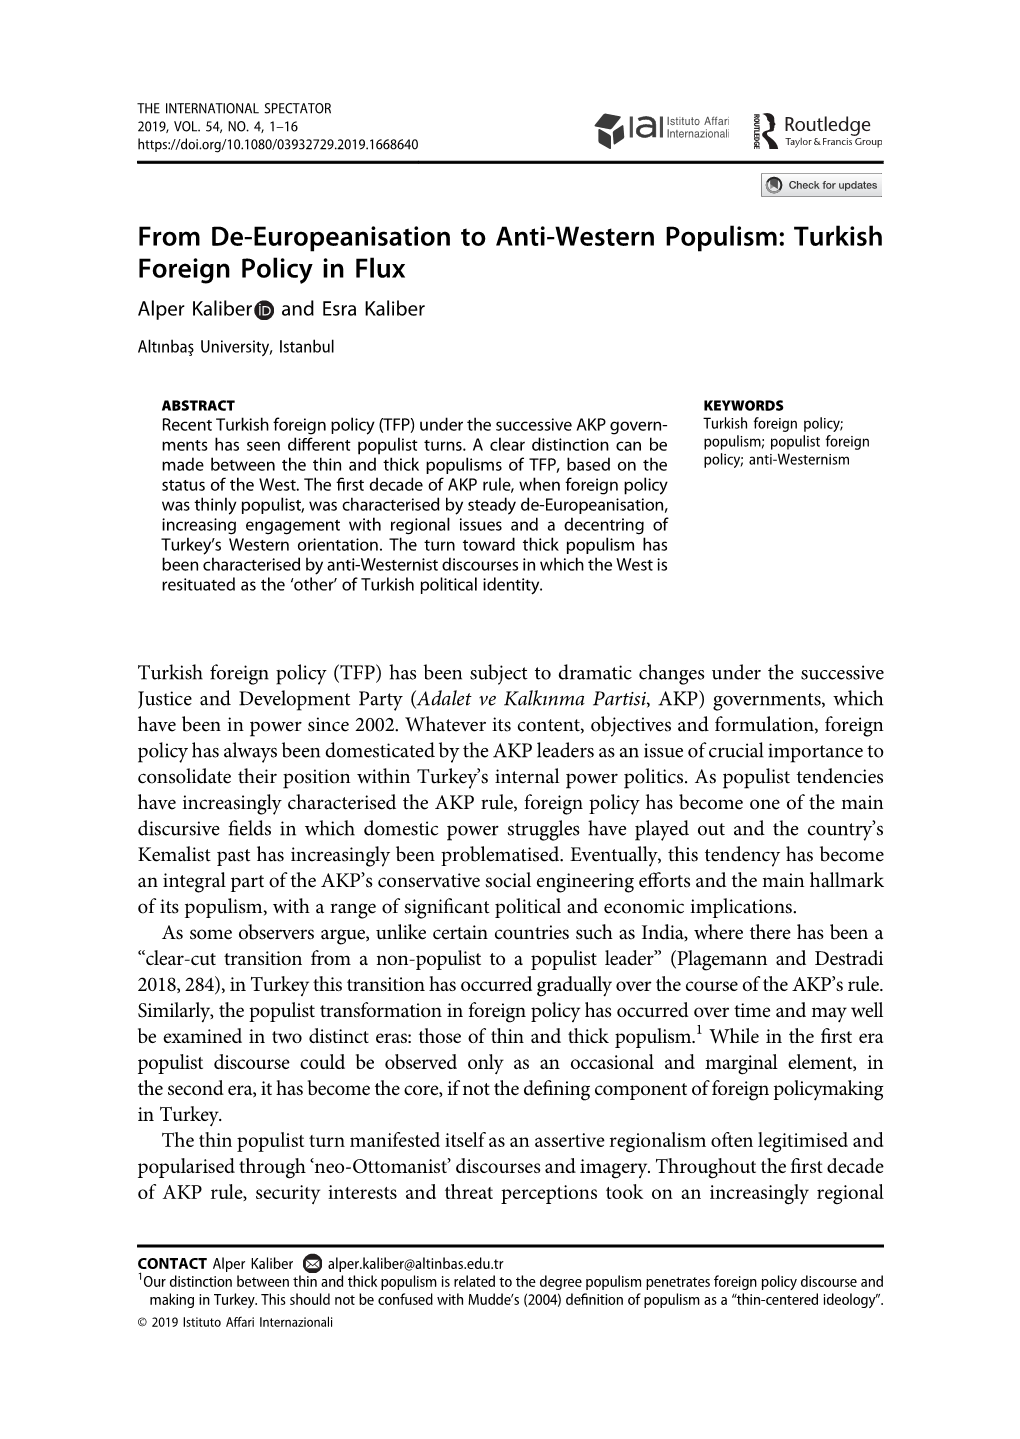 Turkish Foreign Policy in Flux Alper Kaliber and Esra Kaliber